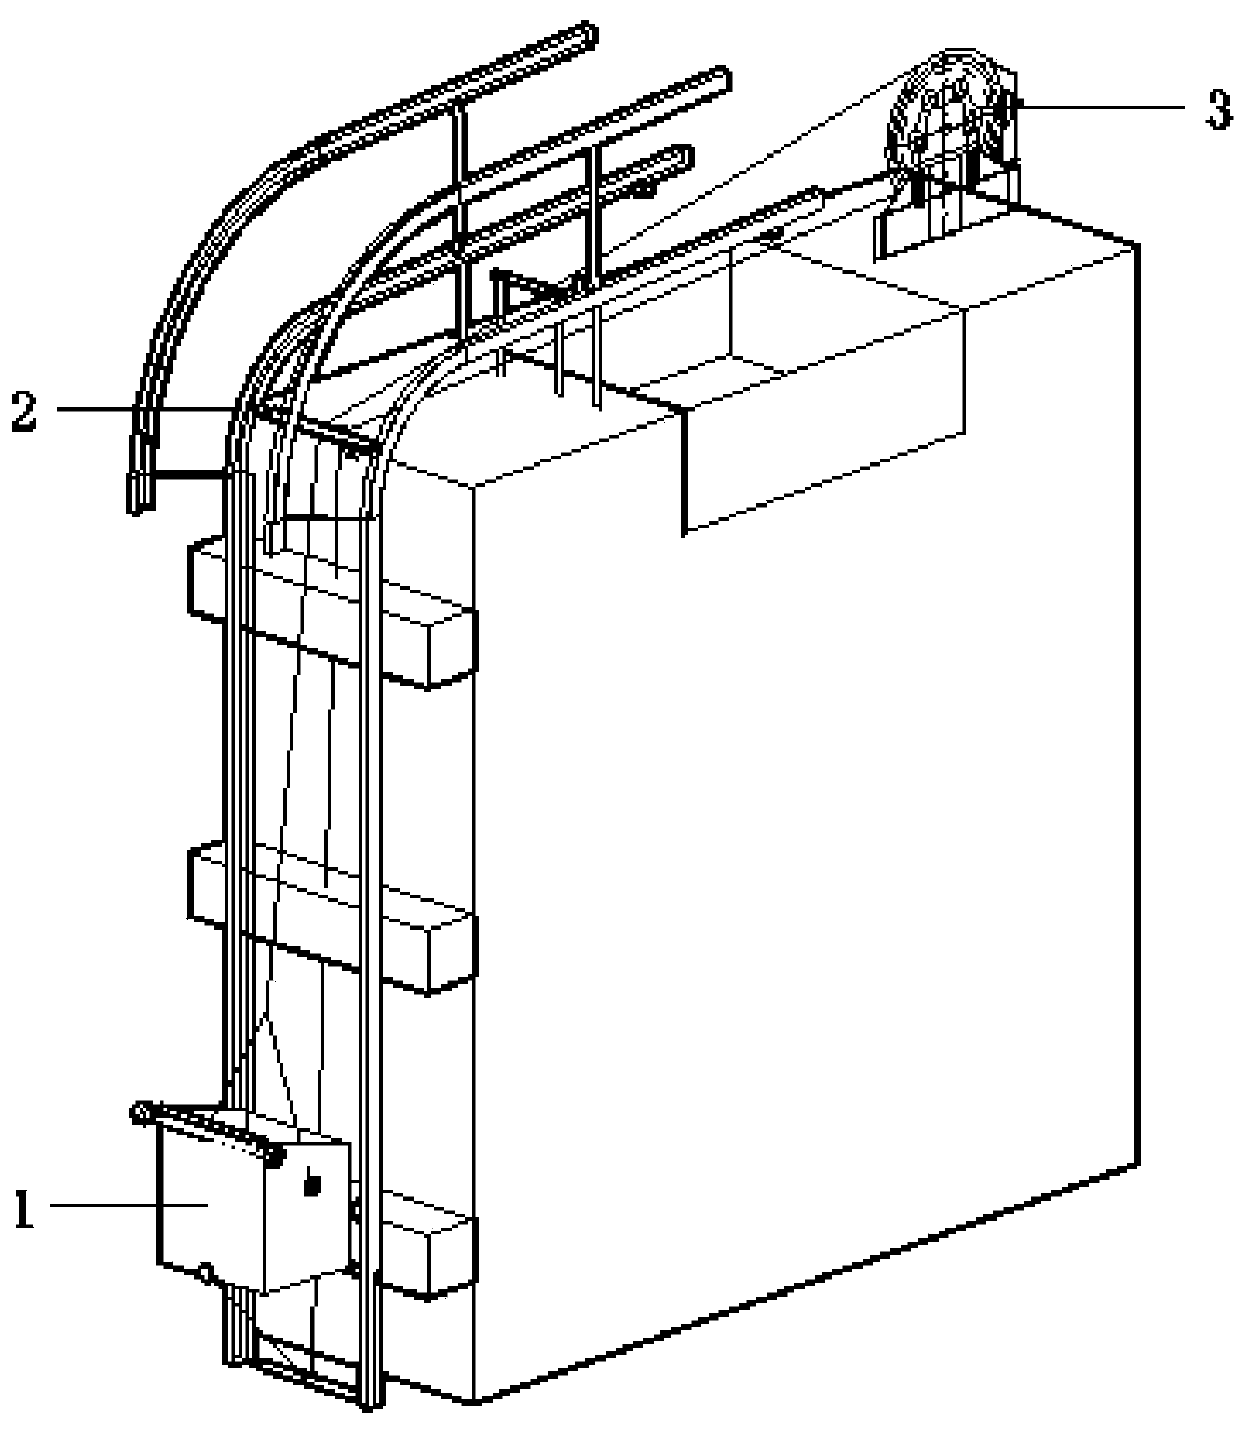 Automatic slag discharging device for rapid construction of subway and automatic slag discharging method